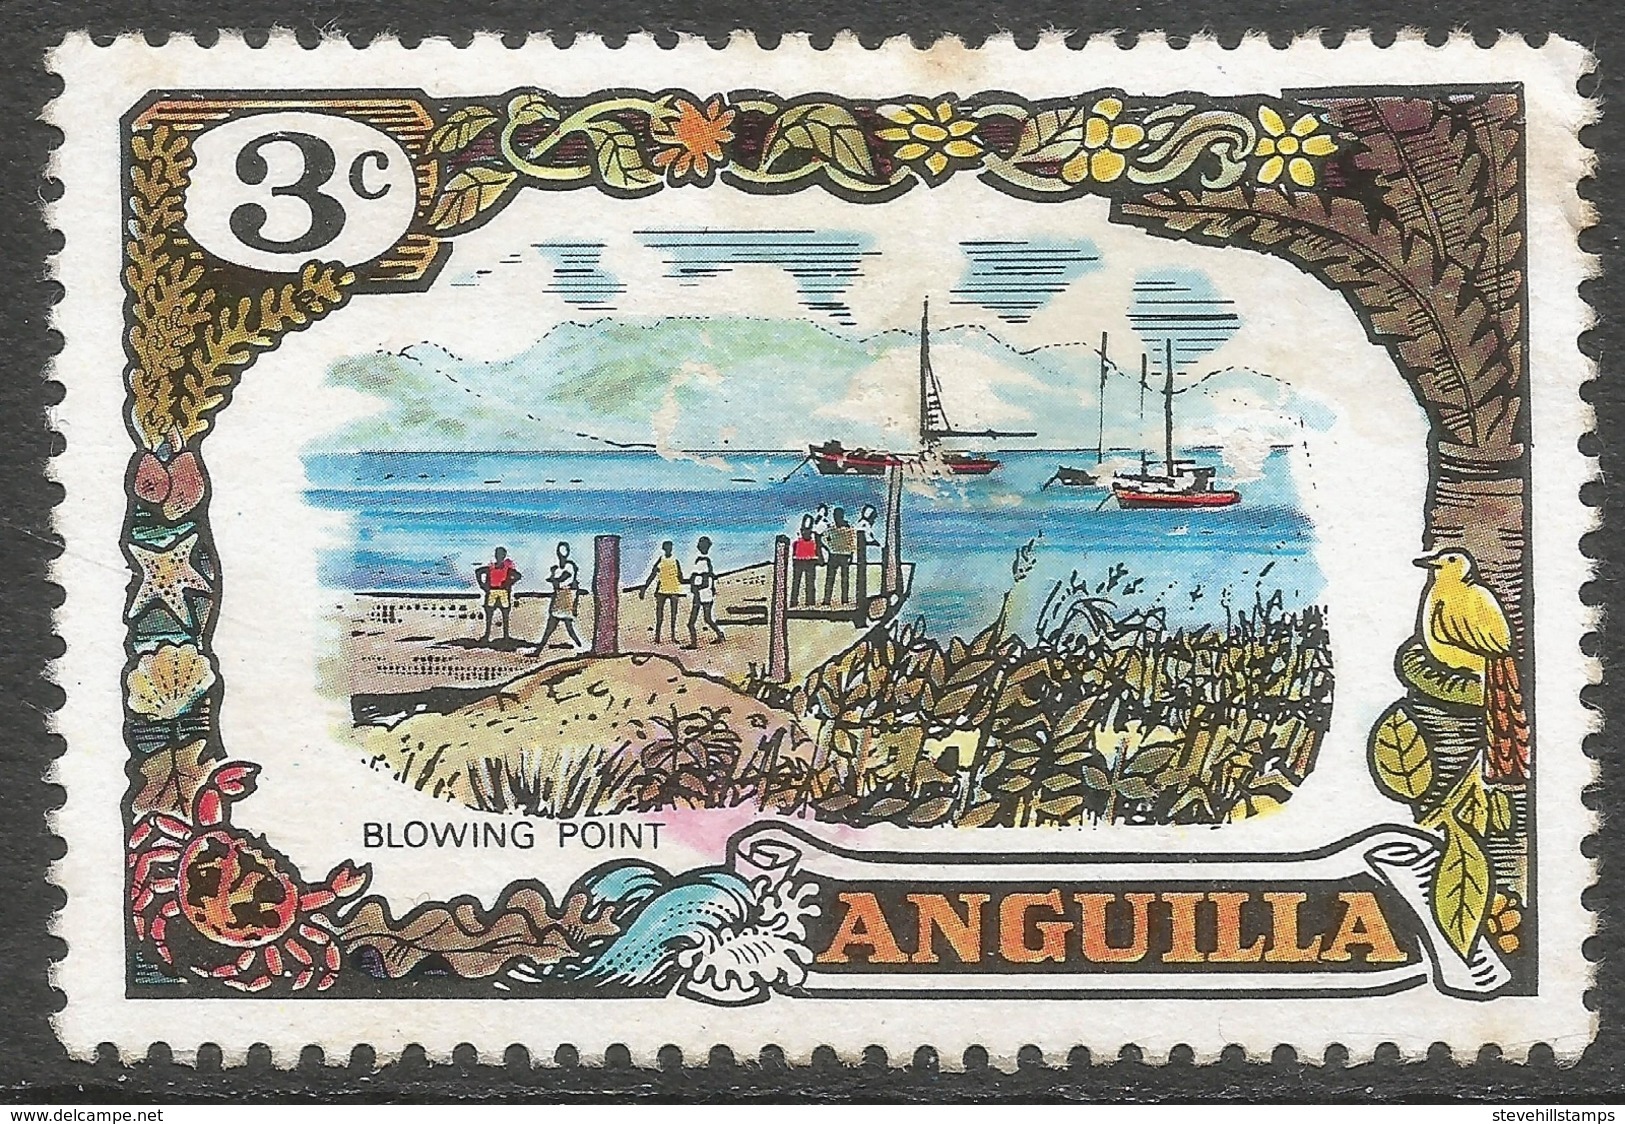 Anguilla. 1970 Definitives. 3c MH. SG 86 - Anguilla (1968-...)